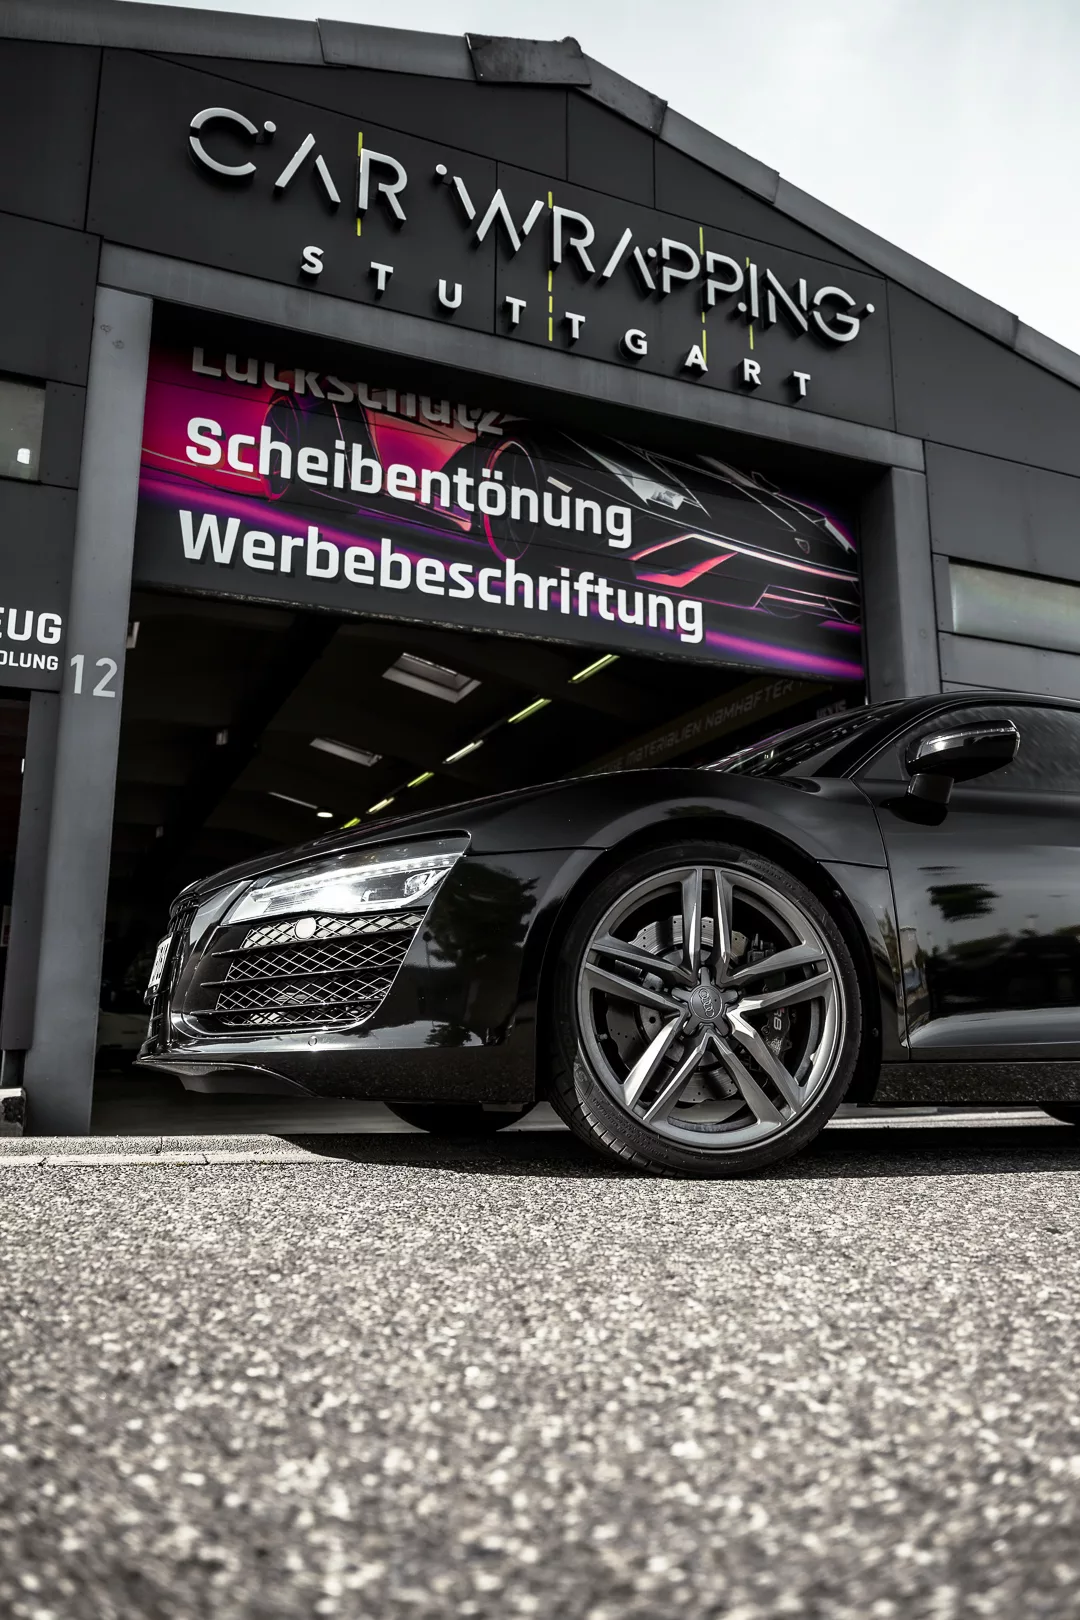 Audi - Car Wrapping